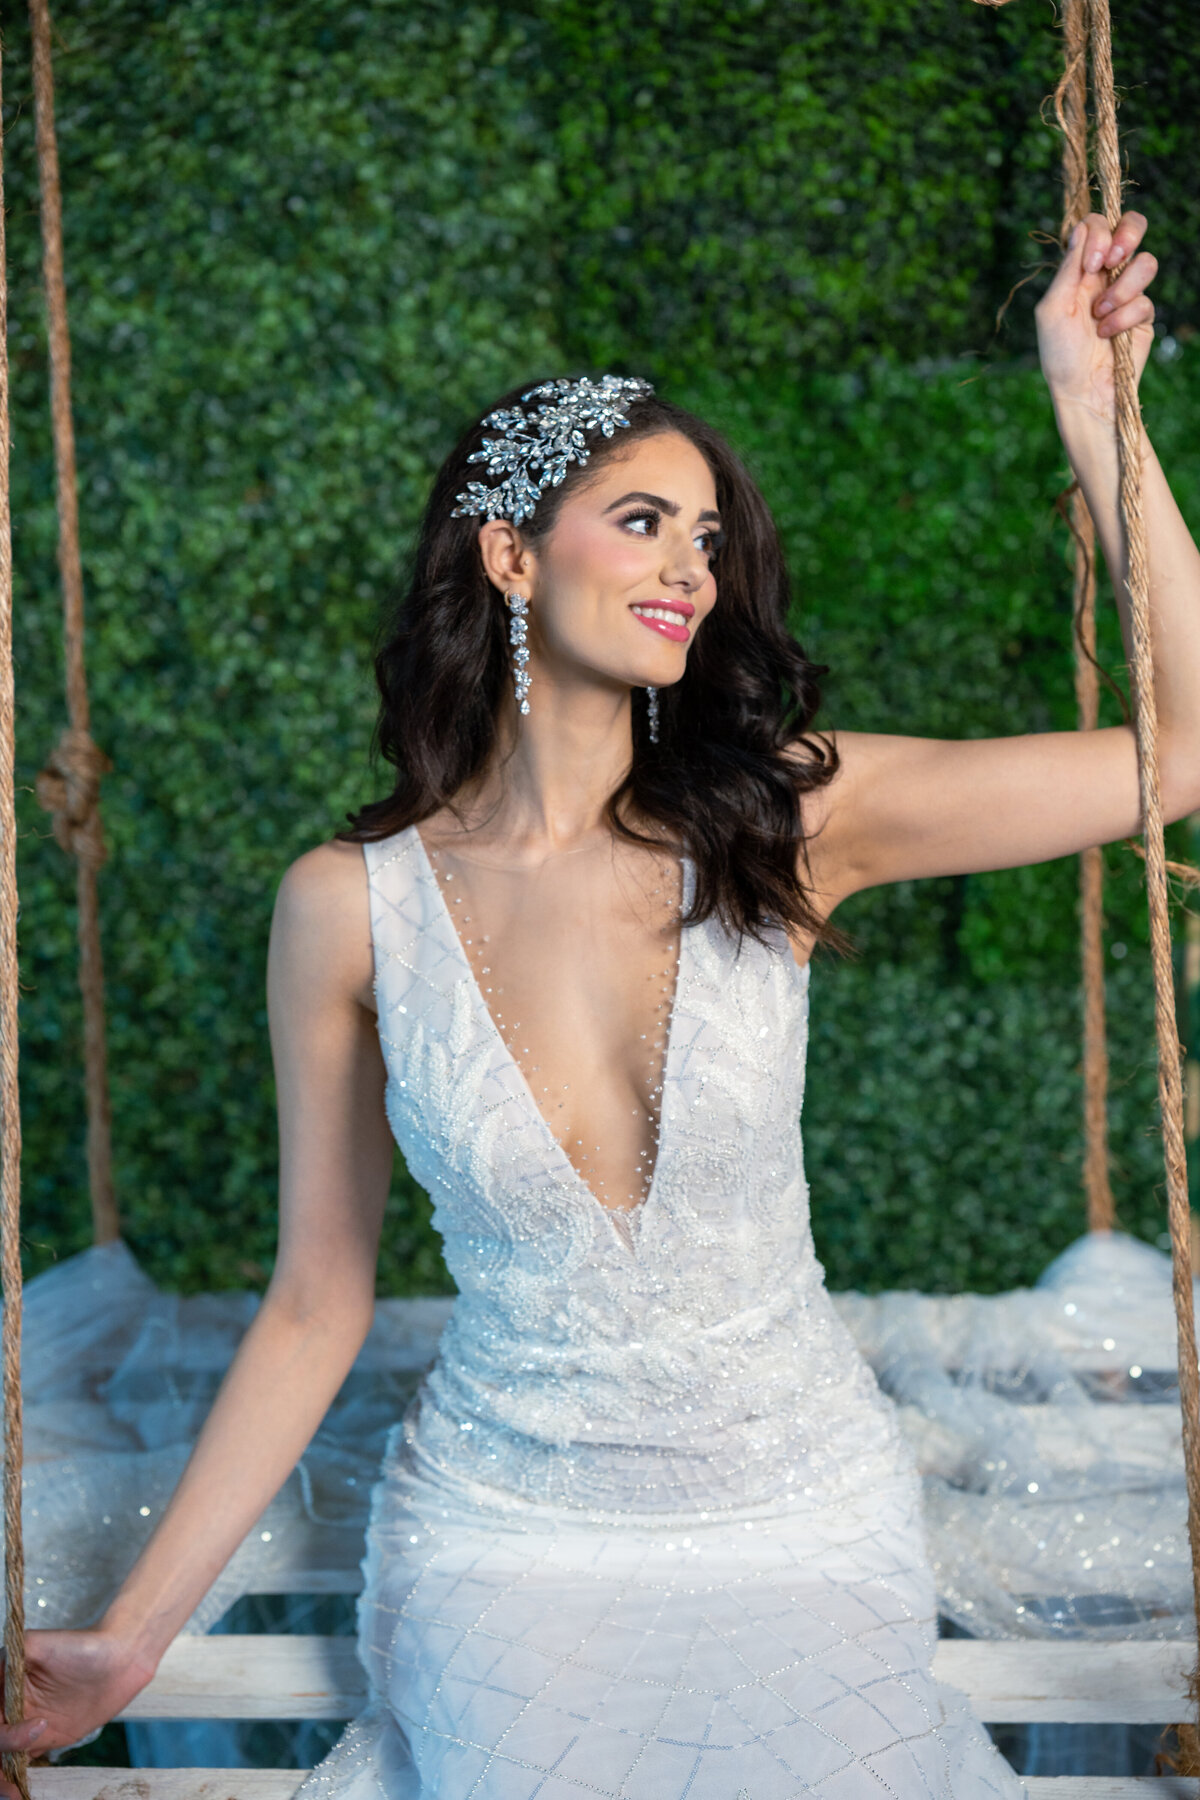 Stylish garden portrait of a bride wearing a V-neck beaded wedding dress sitting on a wood swing.